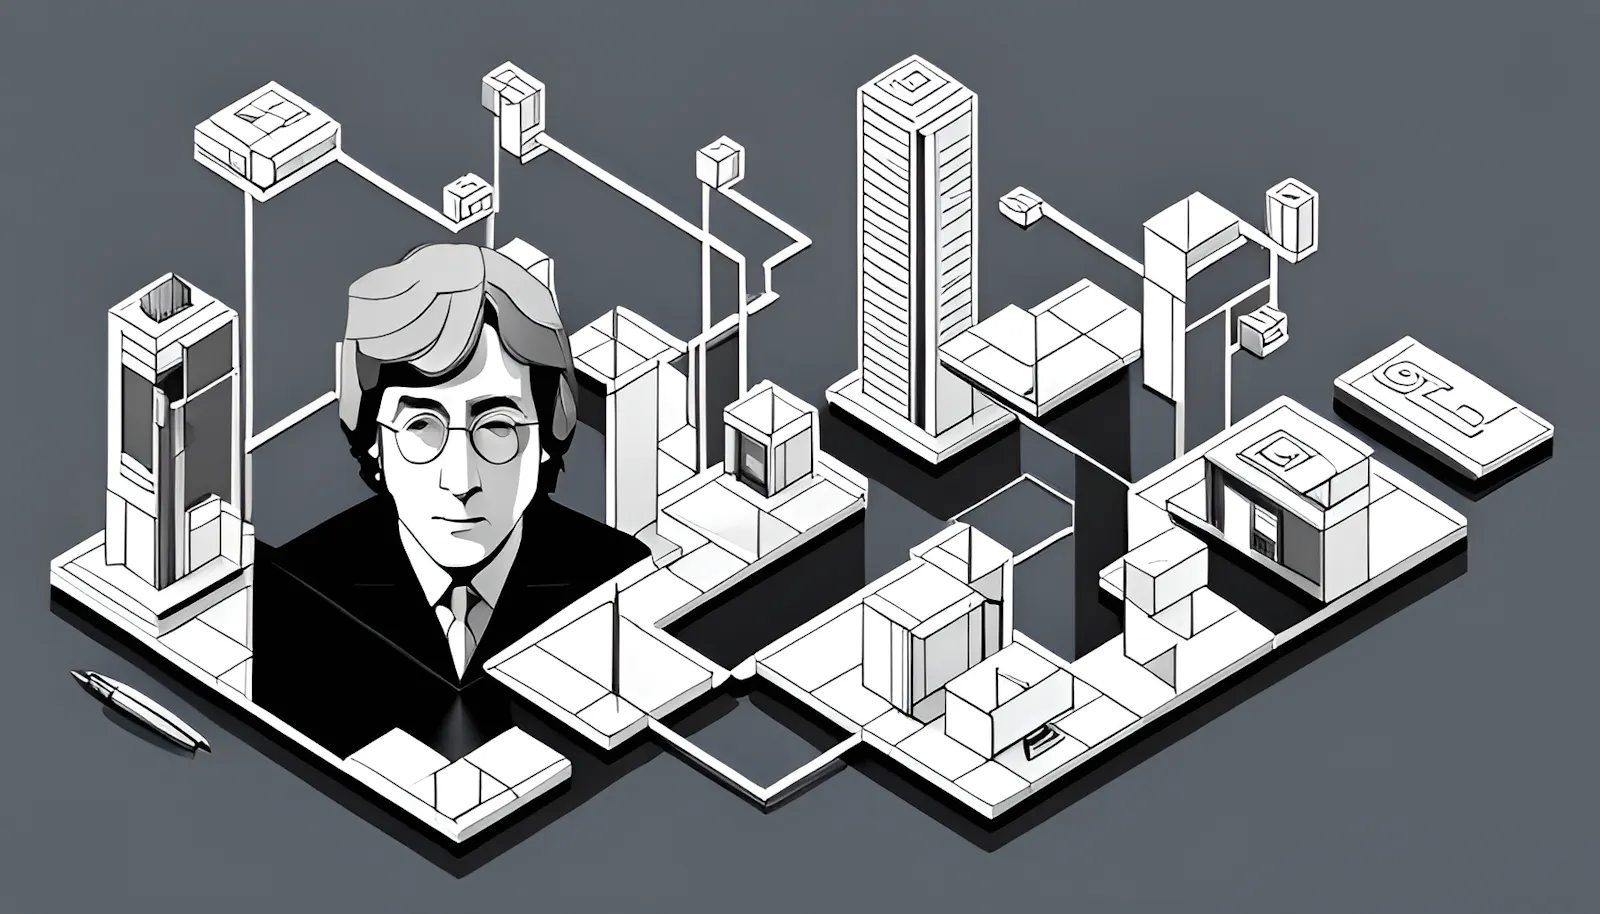 John Lennon amidst an isometric technical drawing